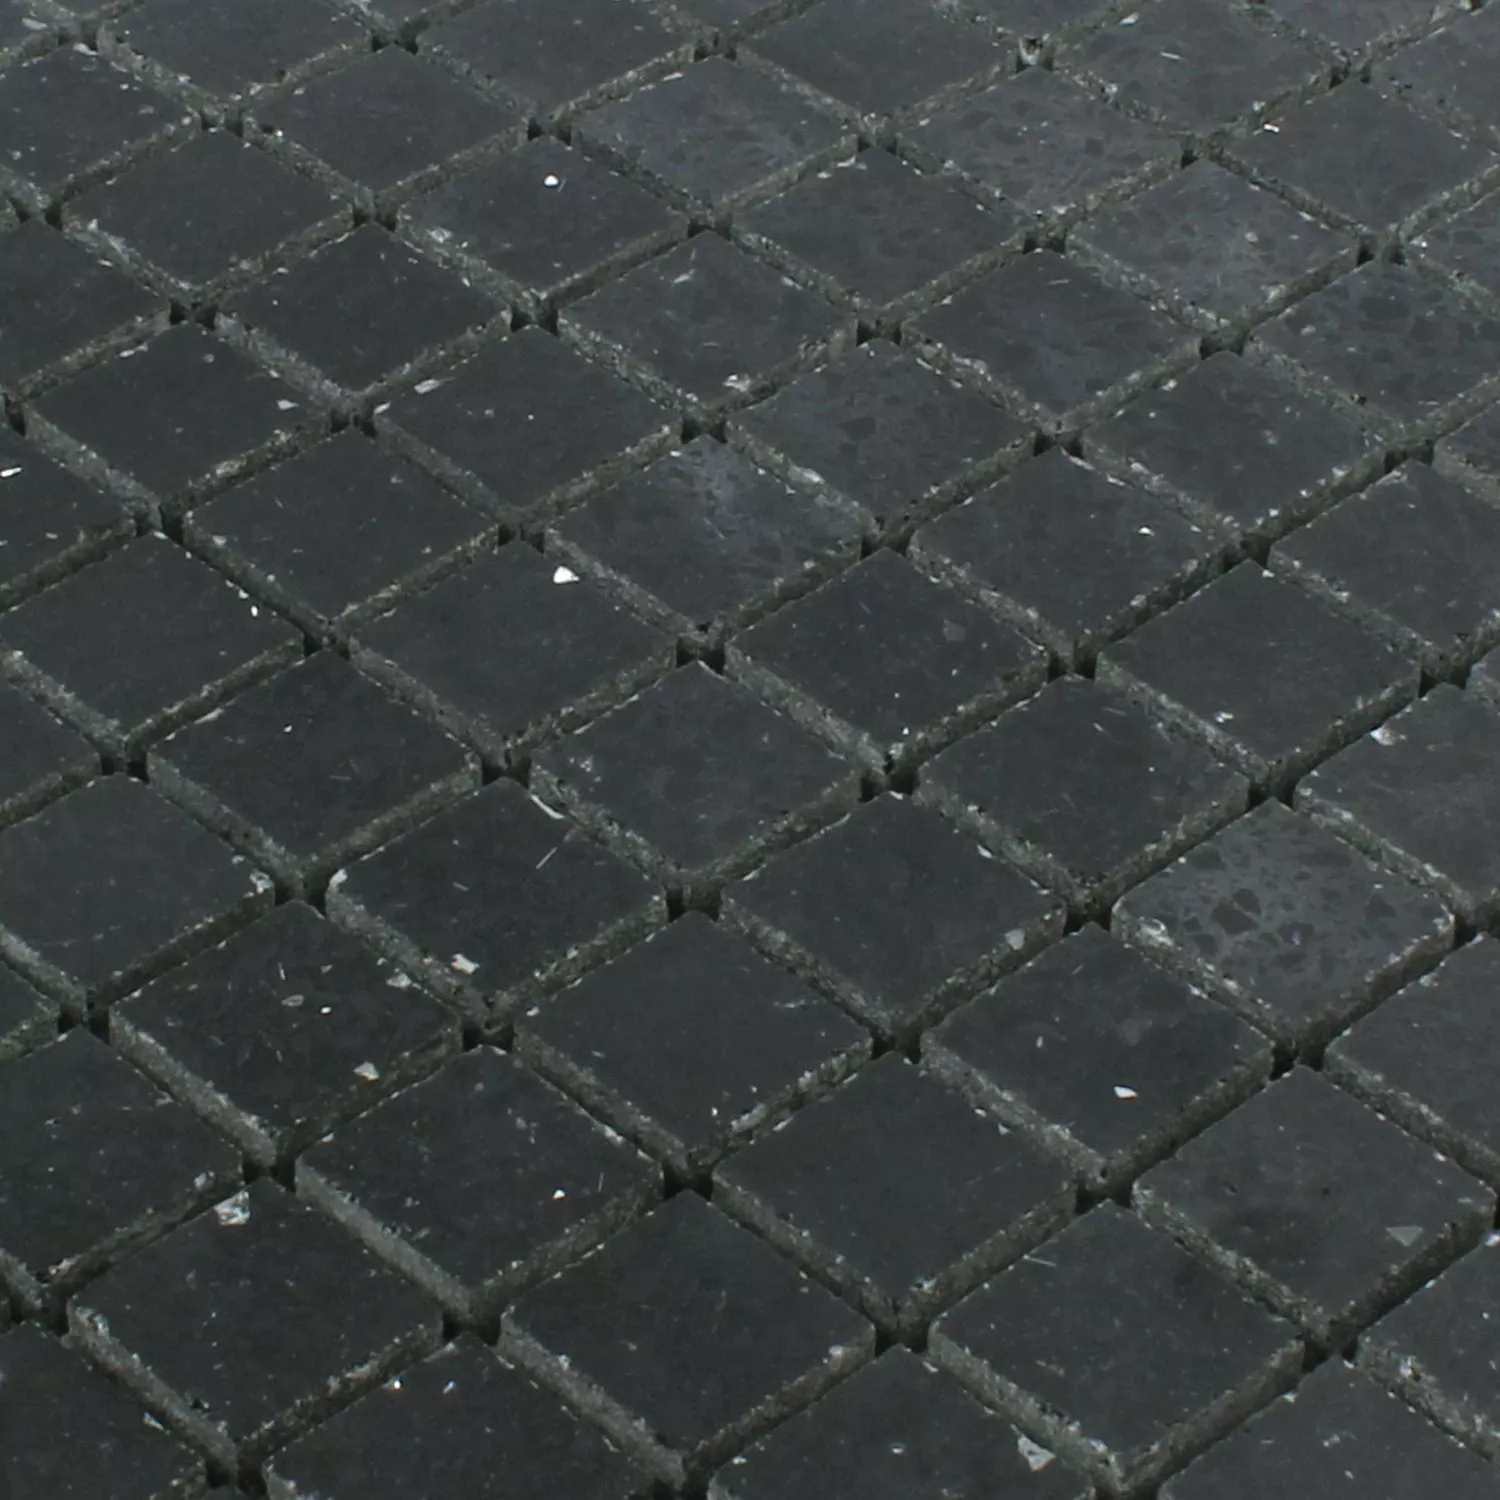 Sample Mosaic Tiles Quartz Resin Black 